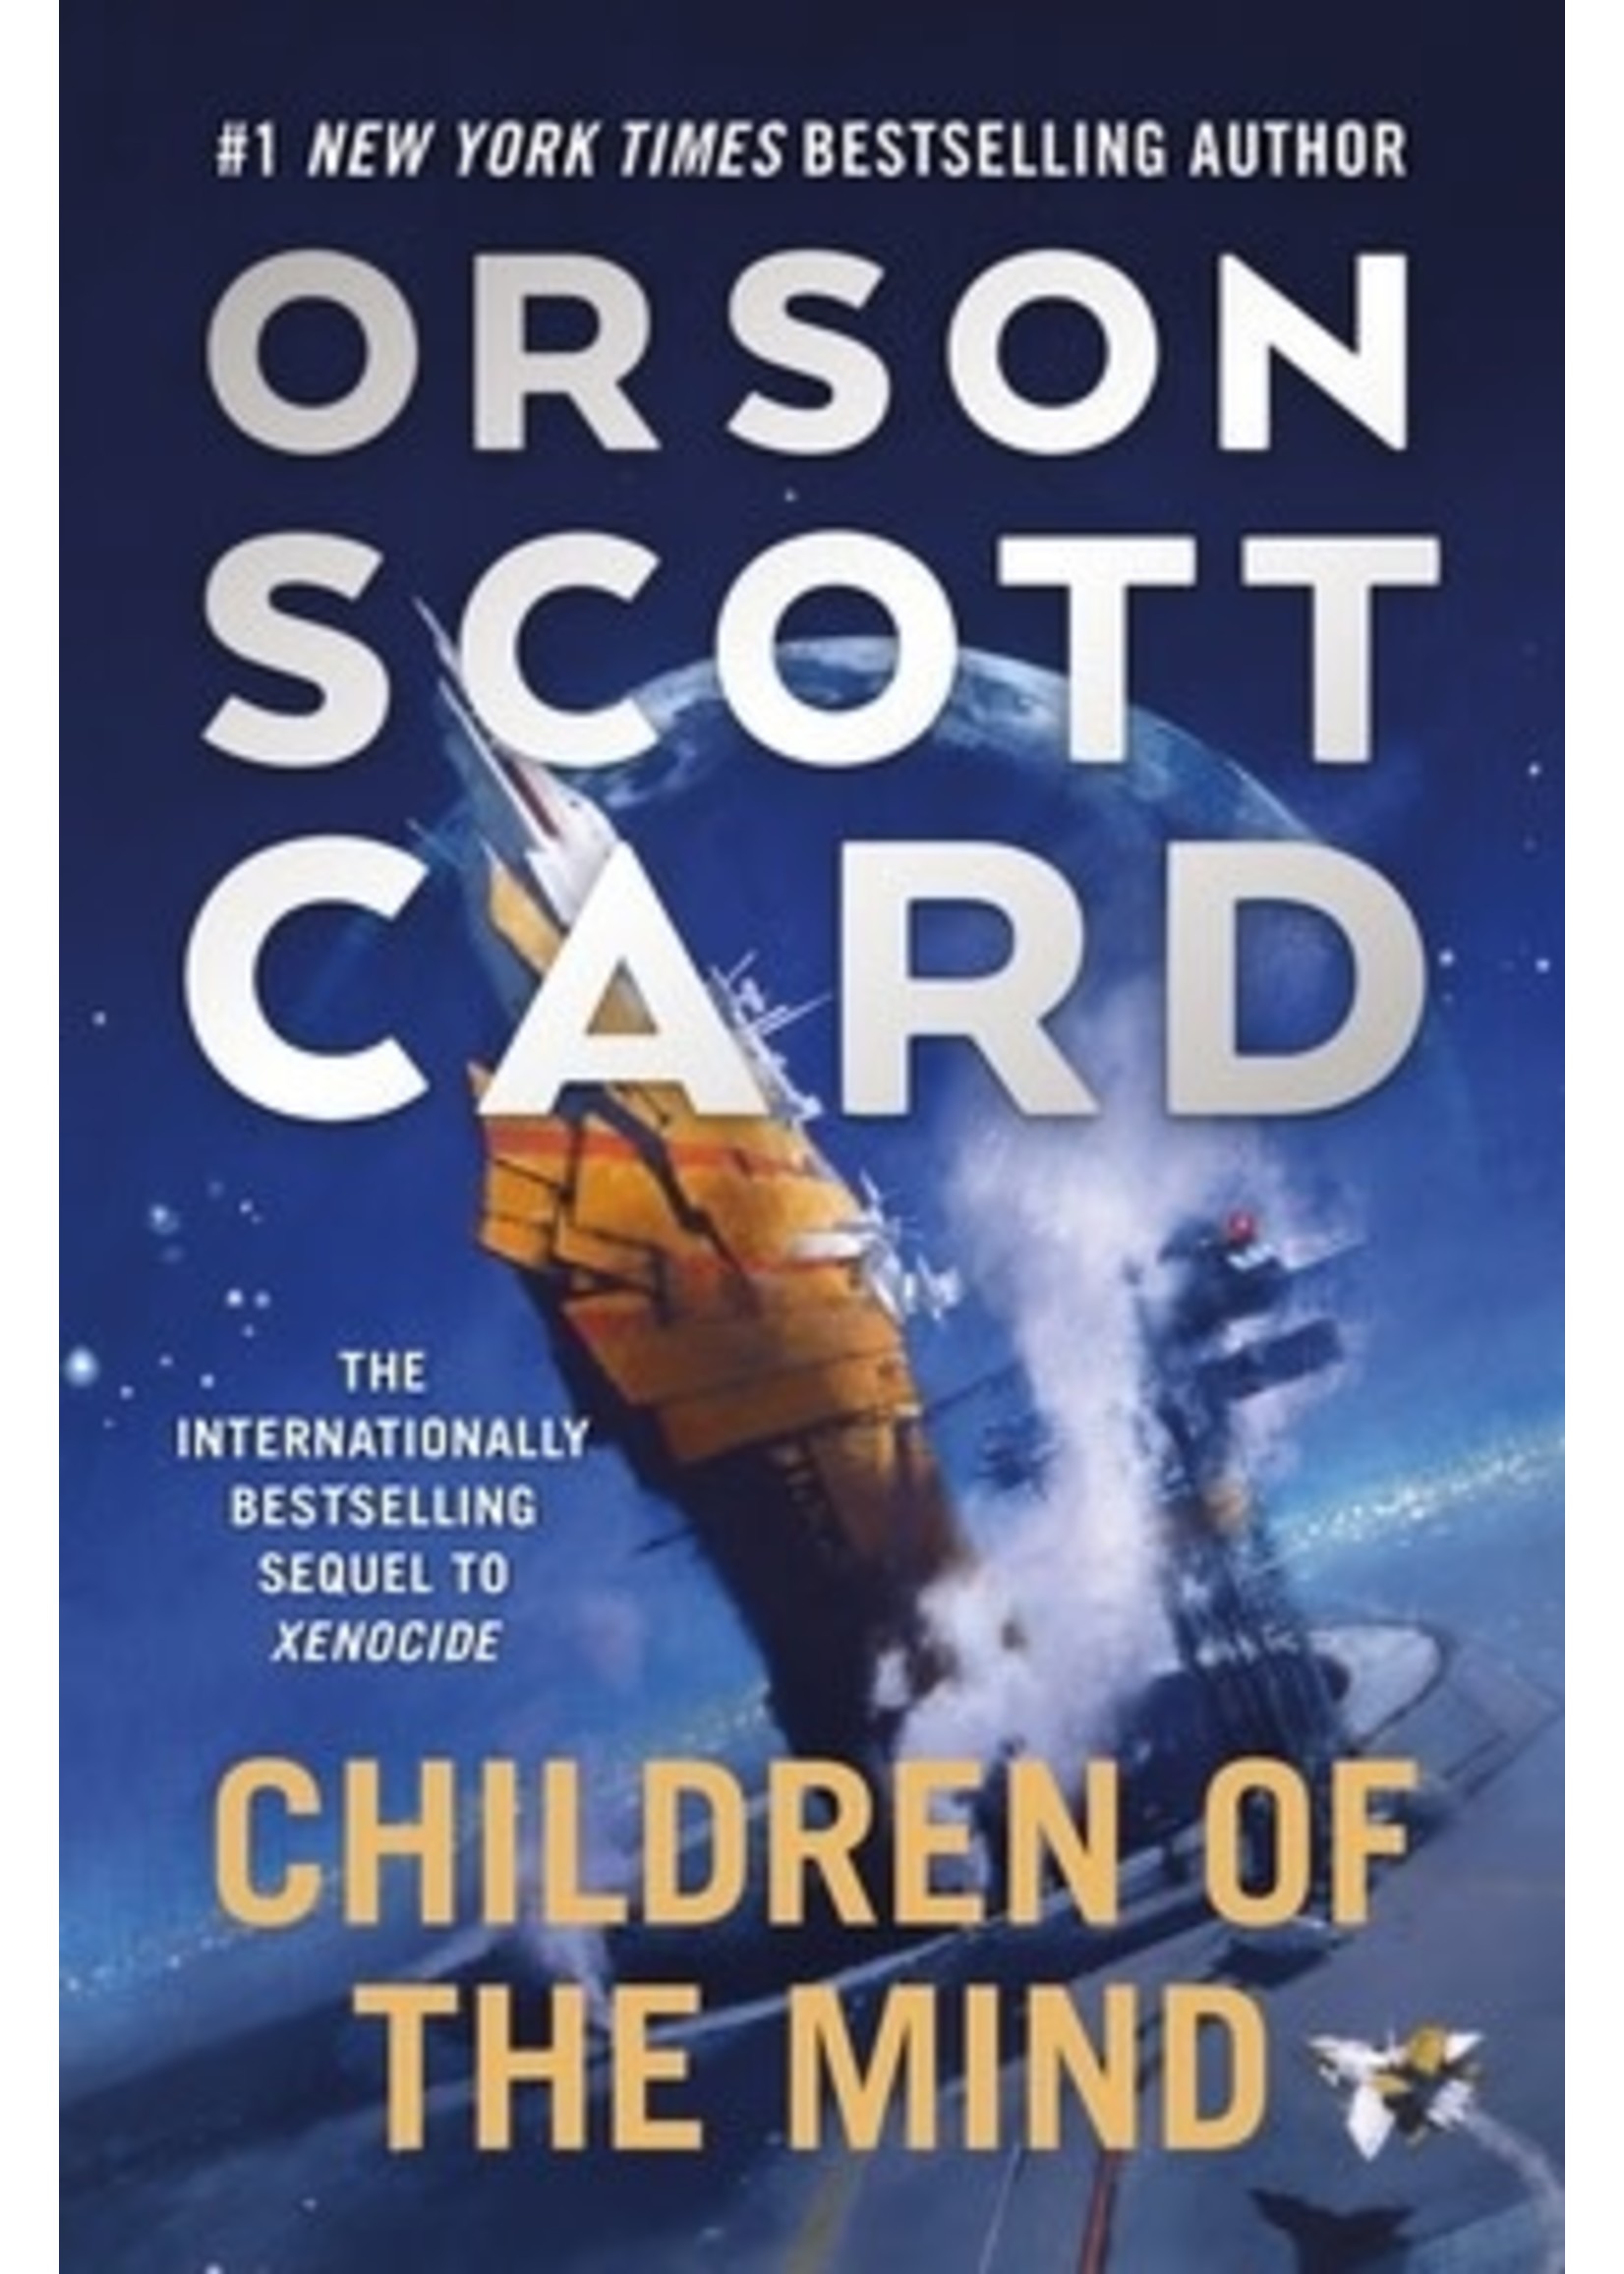 Children of the Mind (Ender's Saga #4) by Orson Scott Card